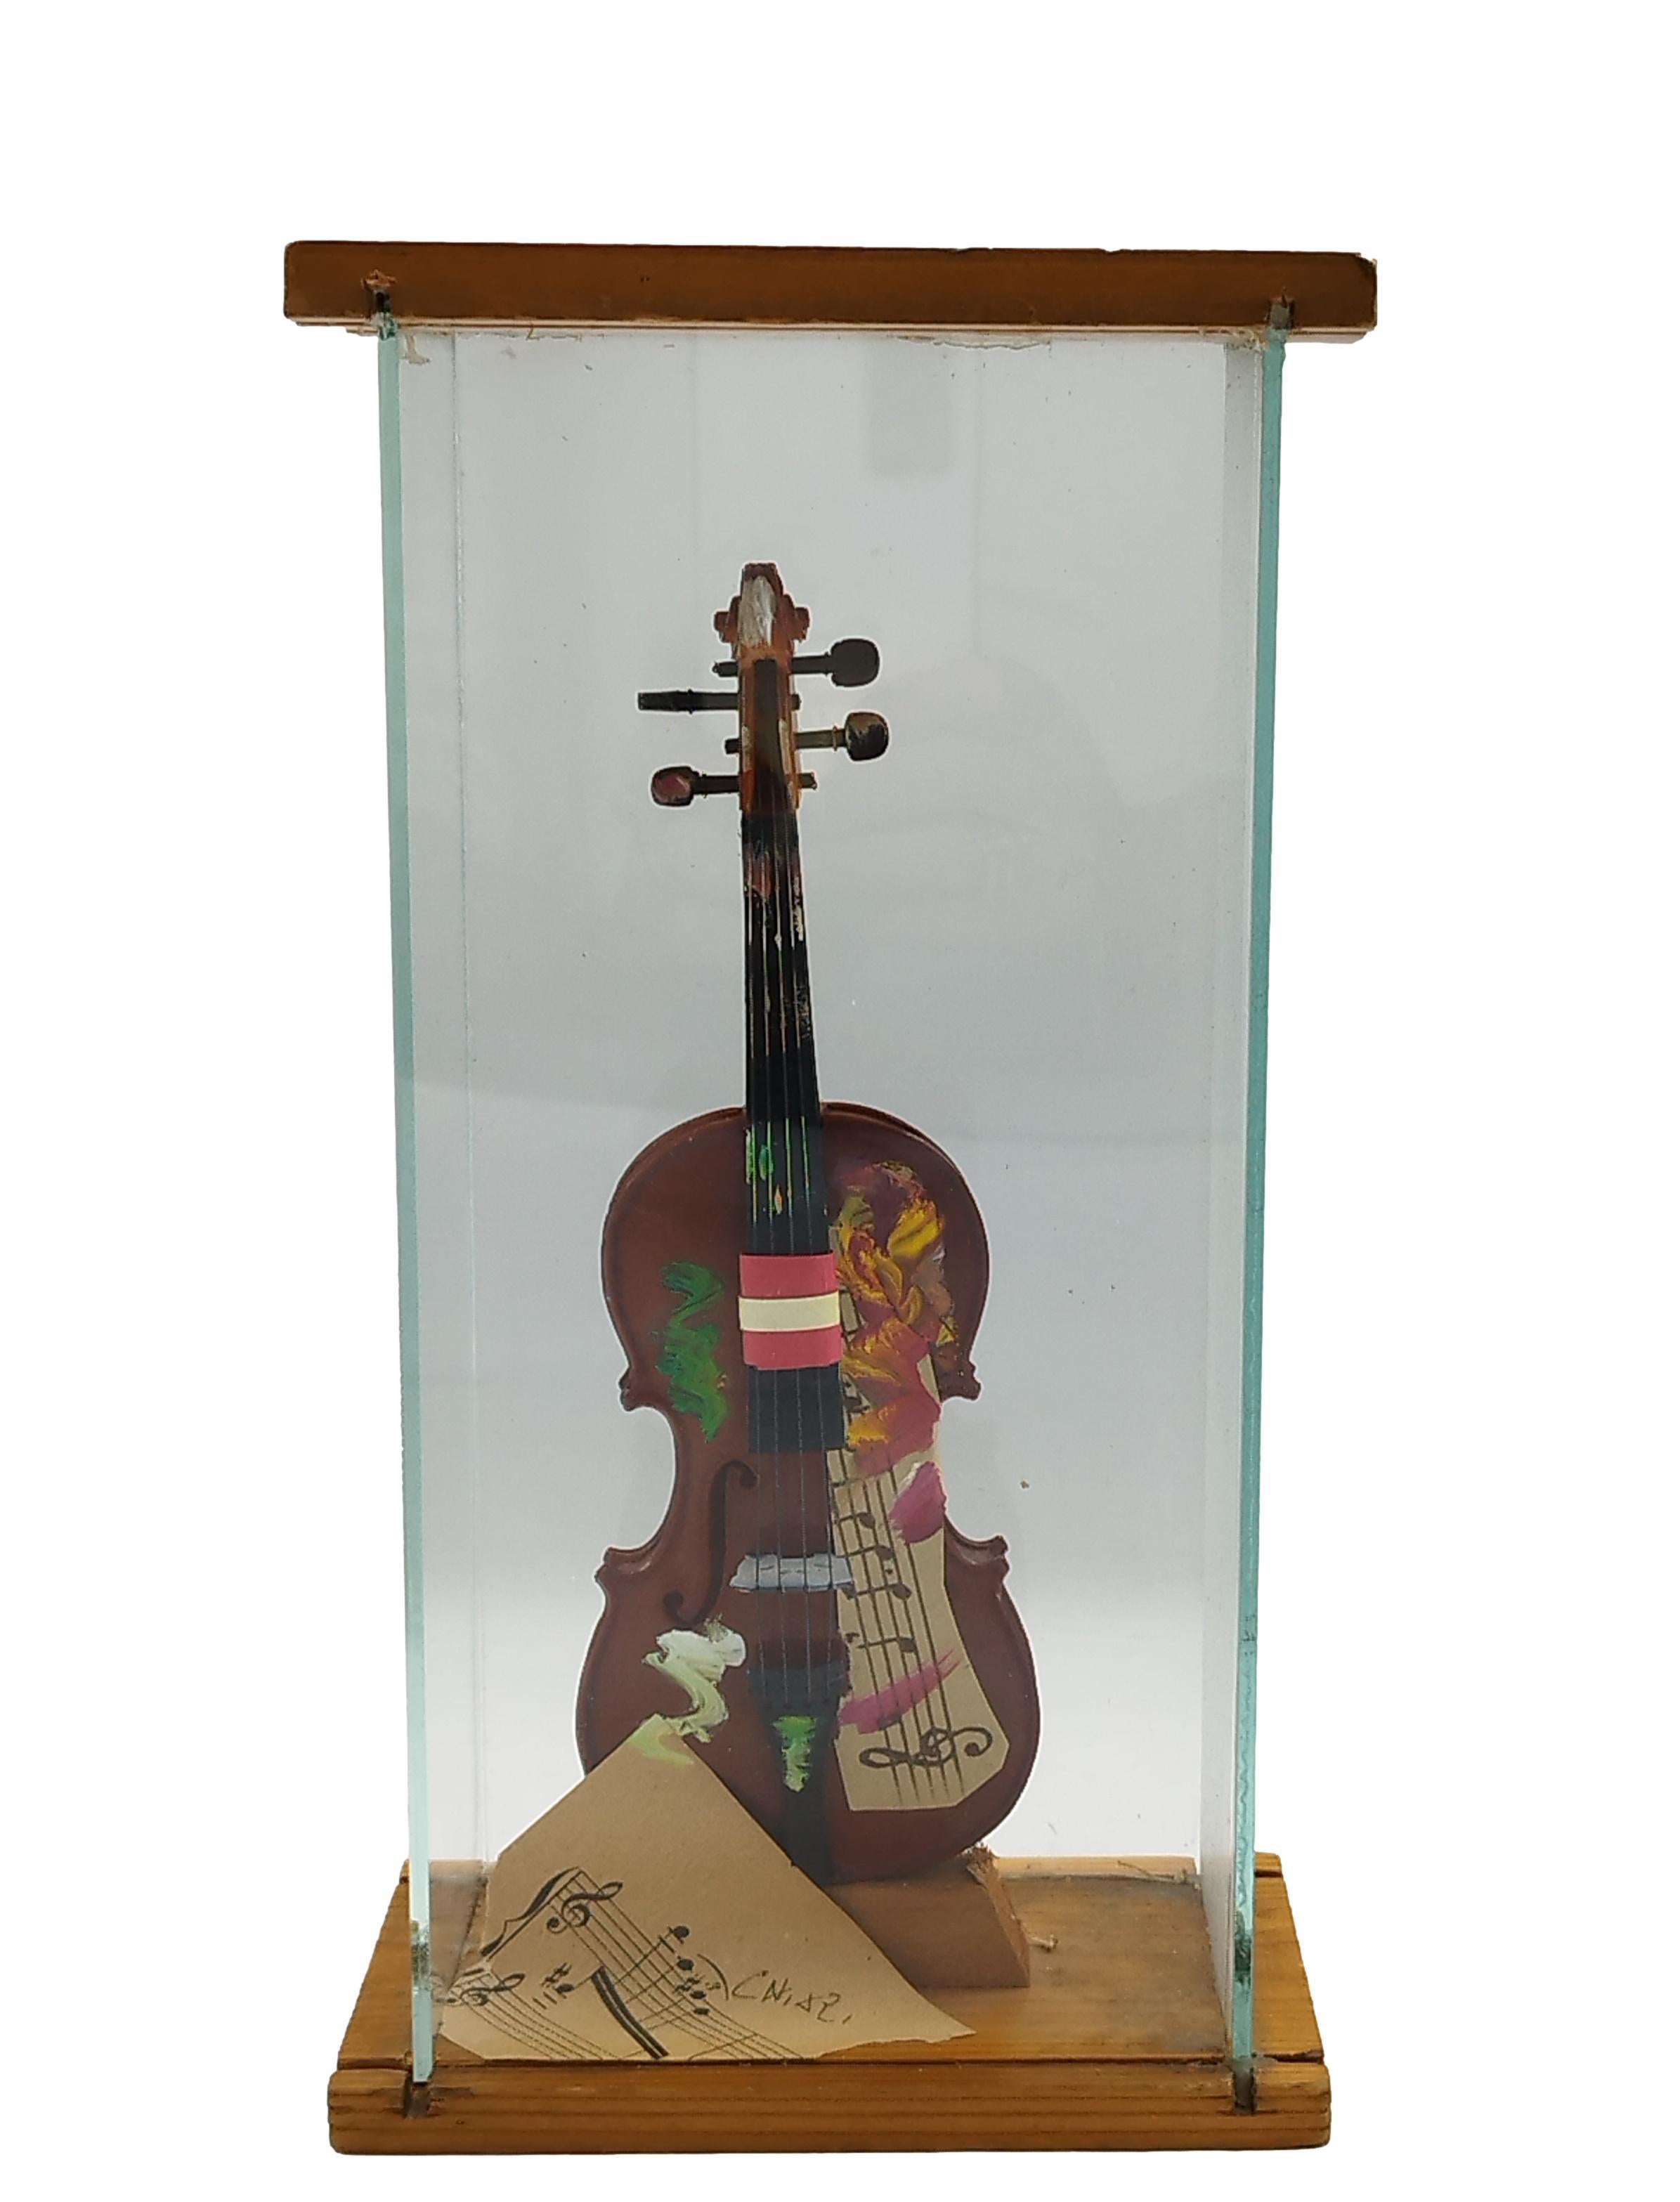 Giuseppe Chiari  Still-Life Sculpture - Violin - Collage and assembly in plexi case, Italy 1970s